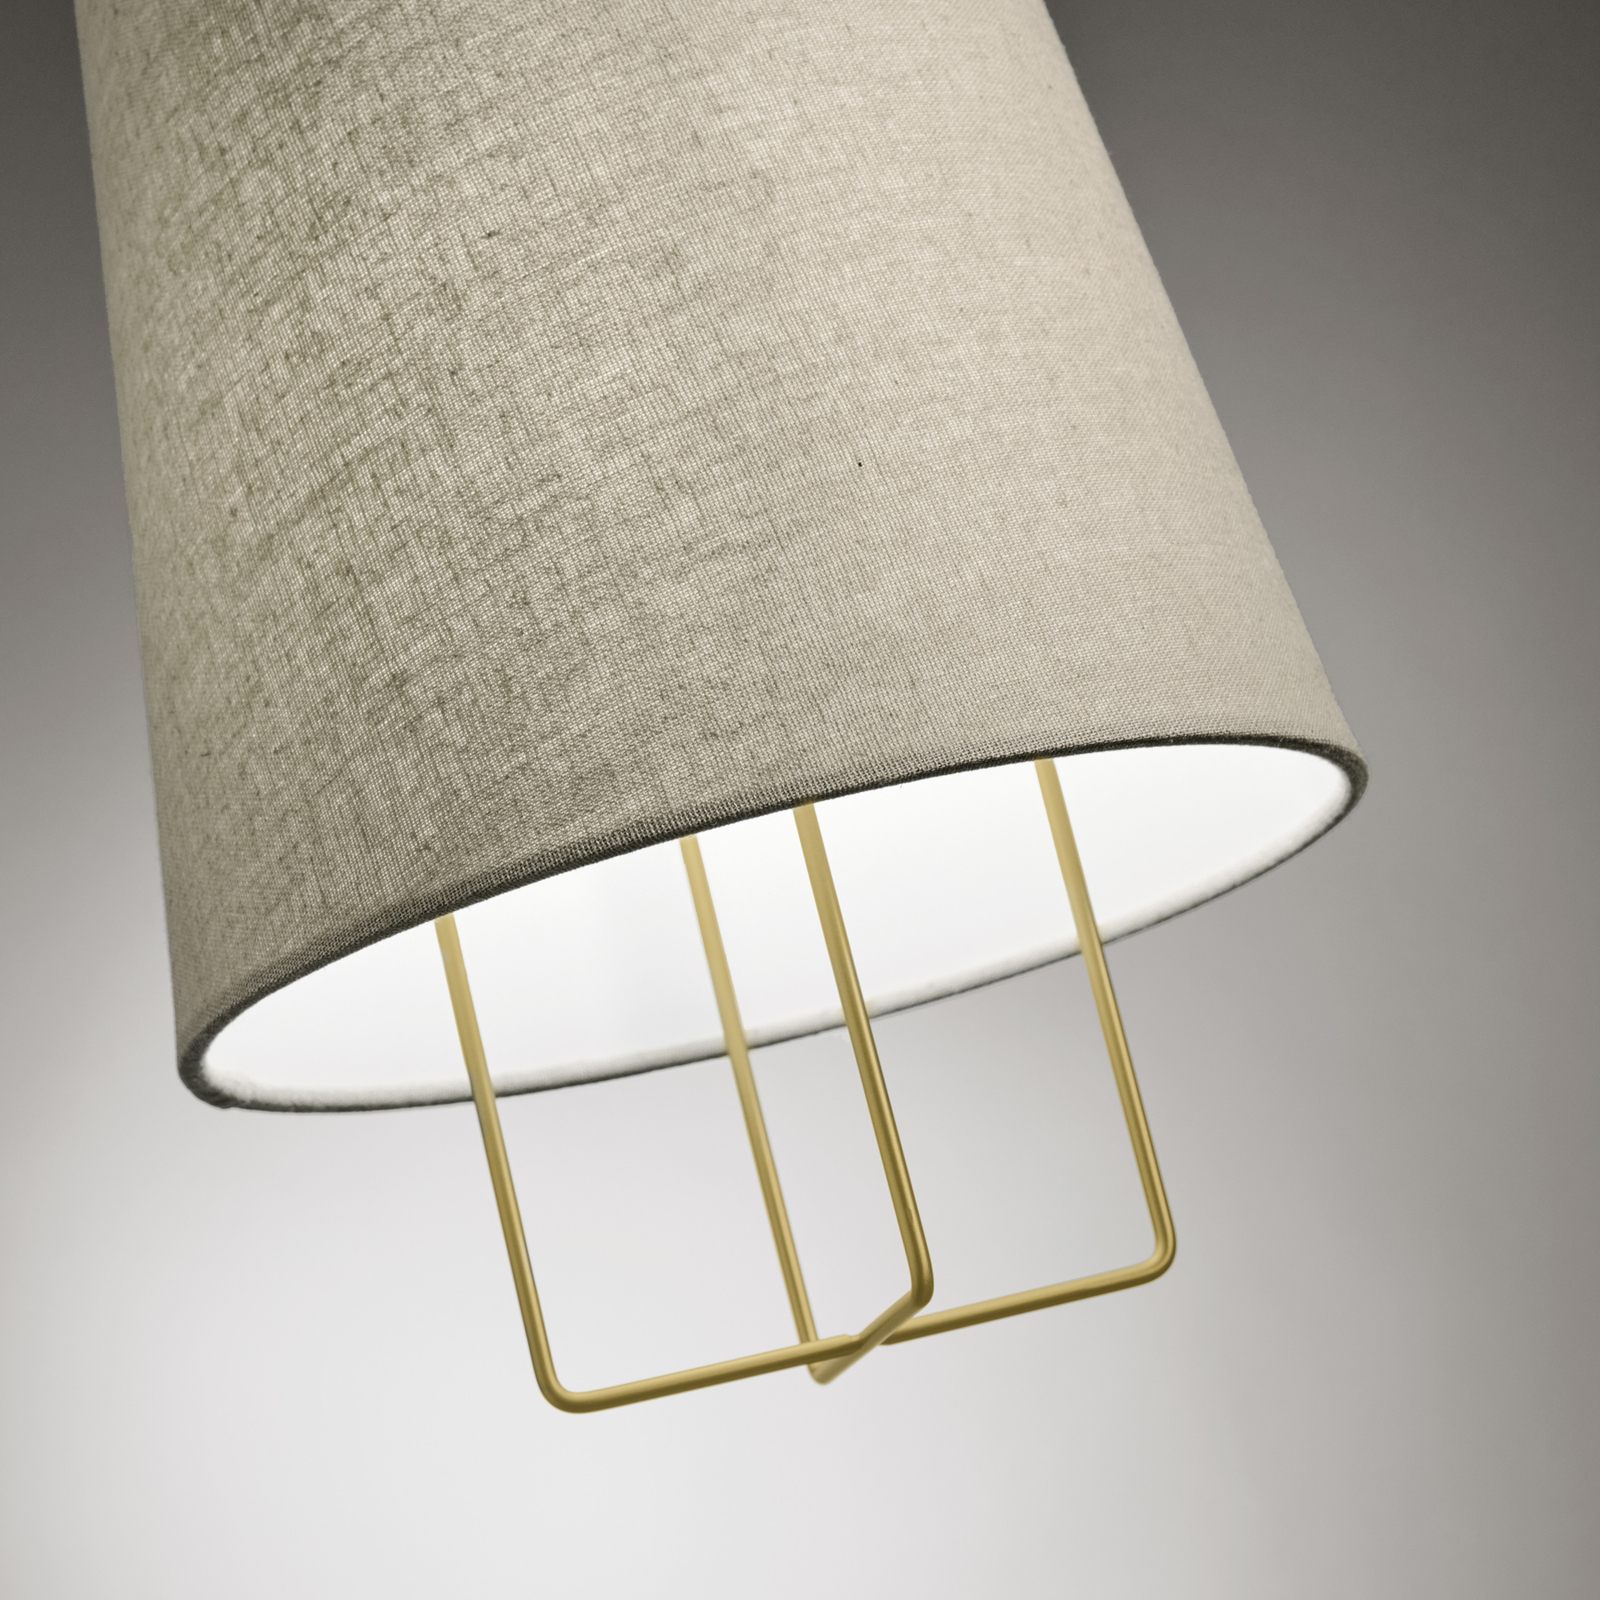 Pyra pendant light, sand-coloured fabric lampshade